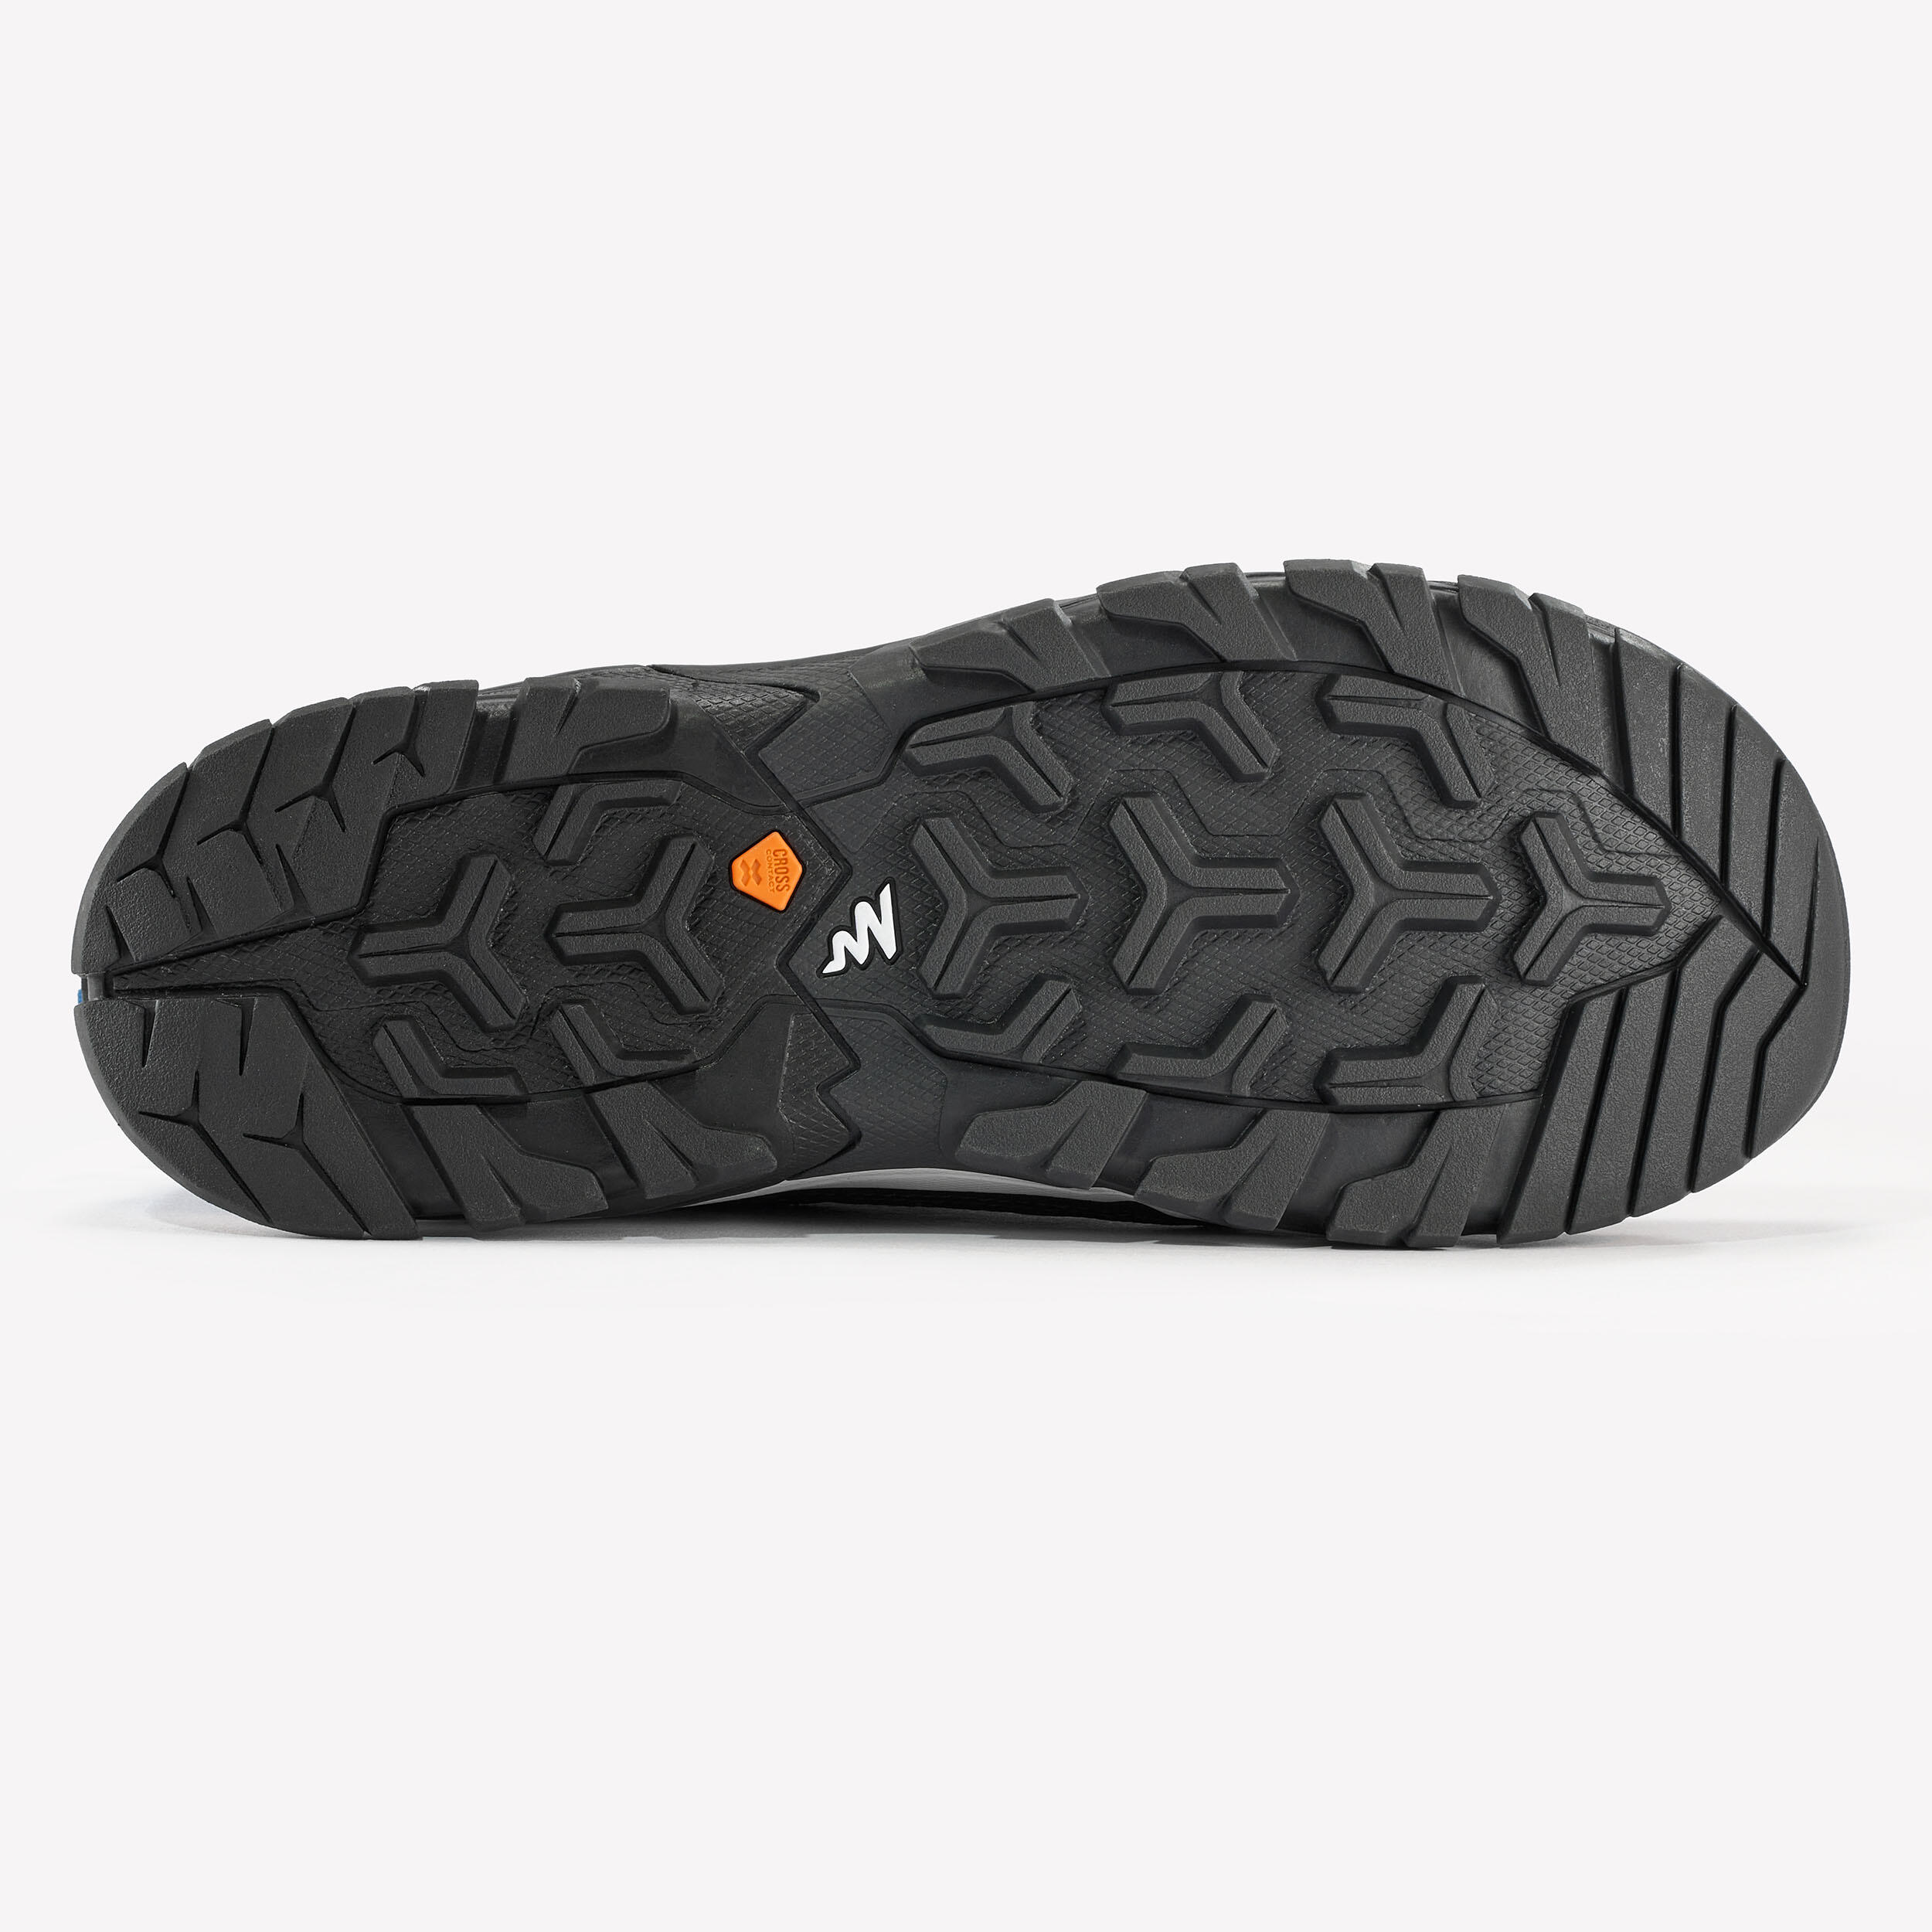 Kids’ Waterproof Lace-up Hiking Shoes - CROSSROCK UK size 2.5 - 5 - Blue 4/10